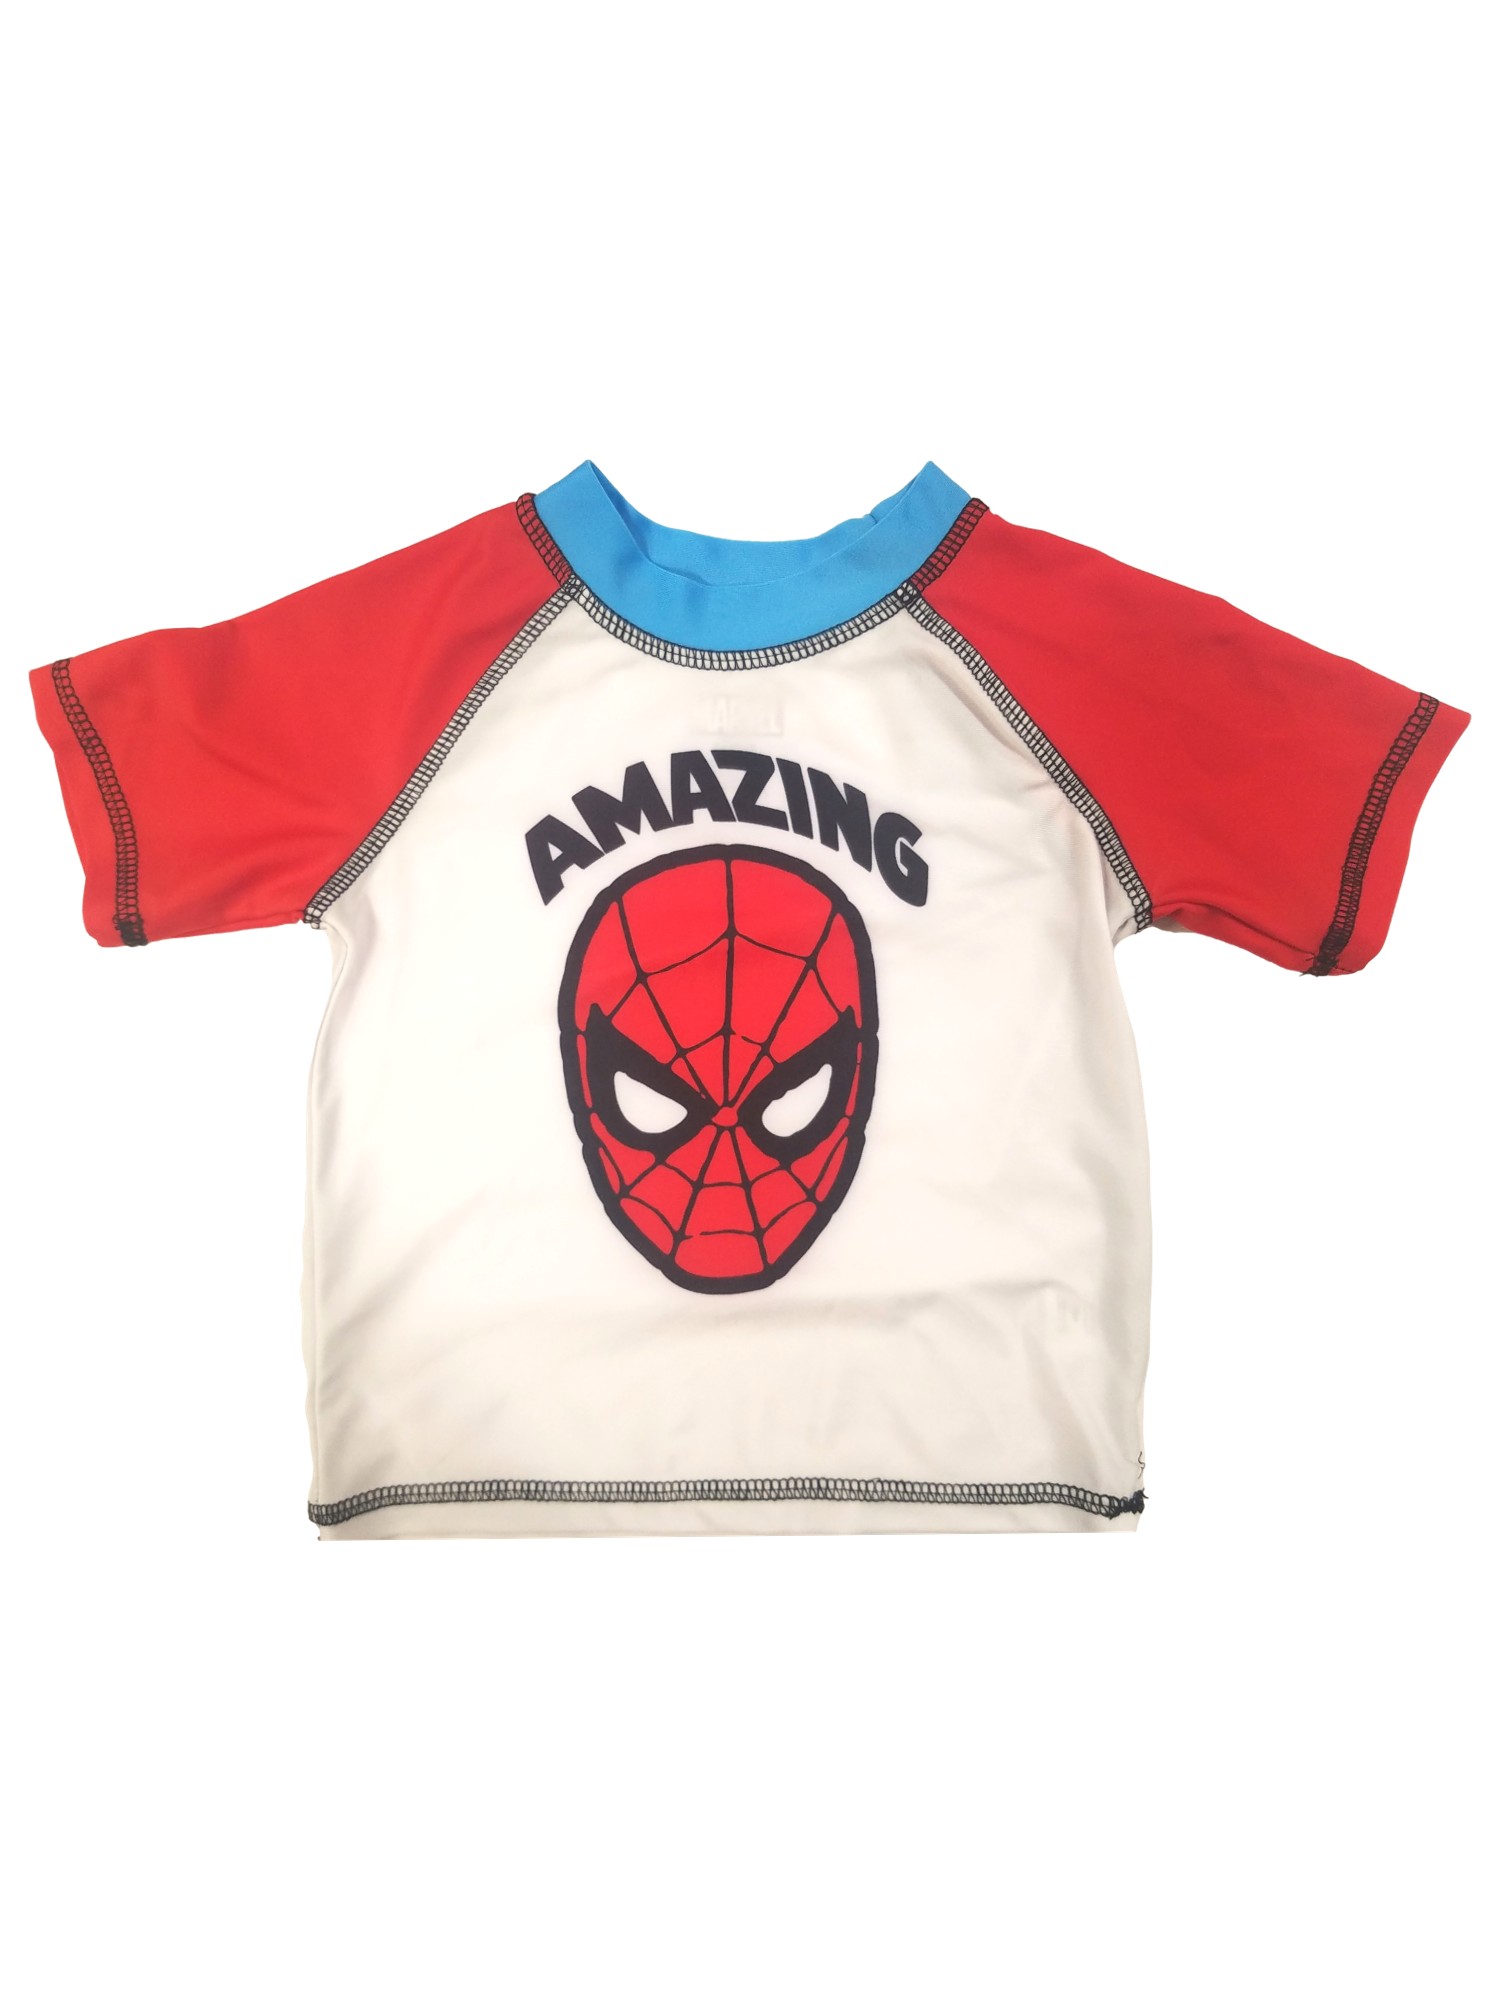 Disney Marvel Infant Boys Red, White & Blue Spiderman Rash Guard Swim Shirt 2T